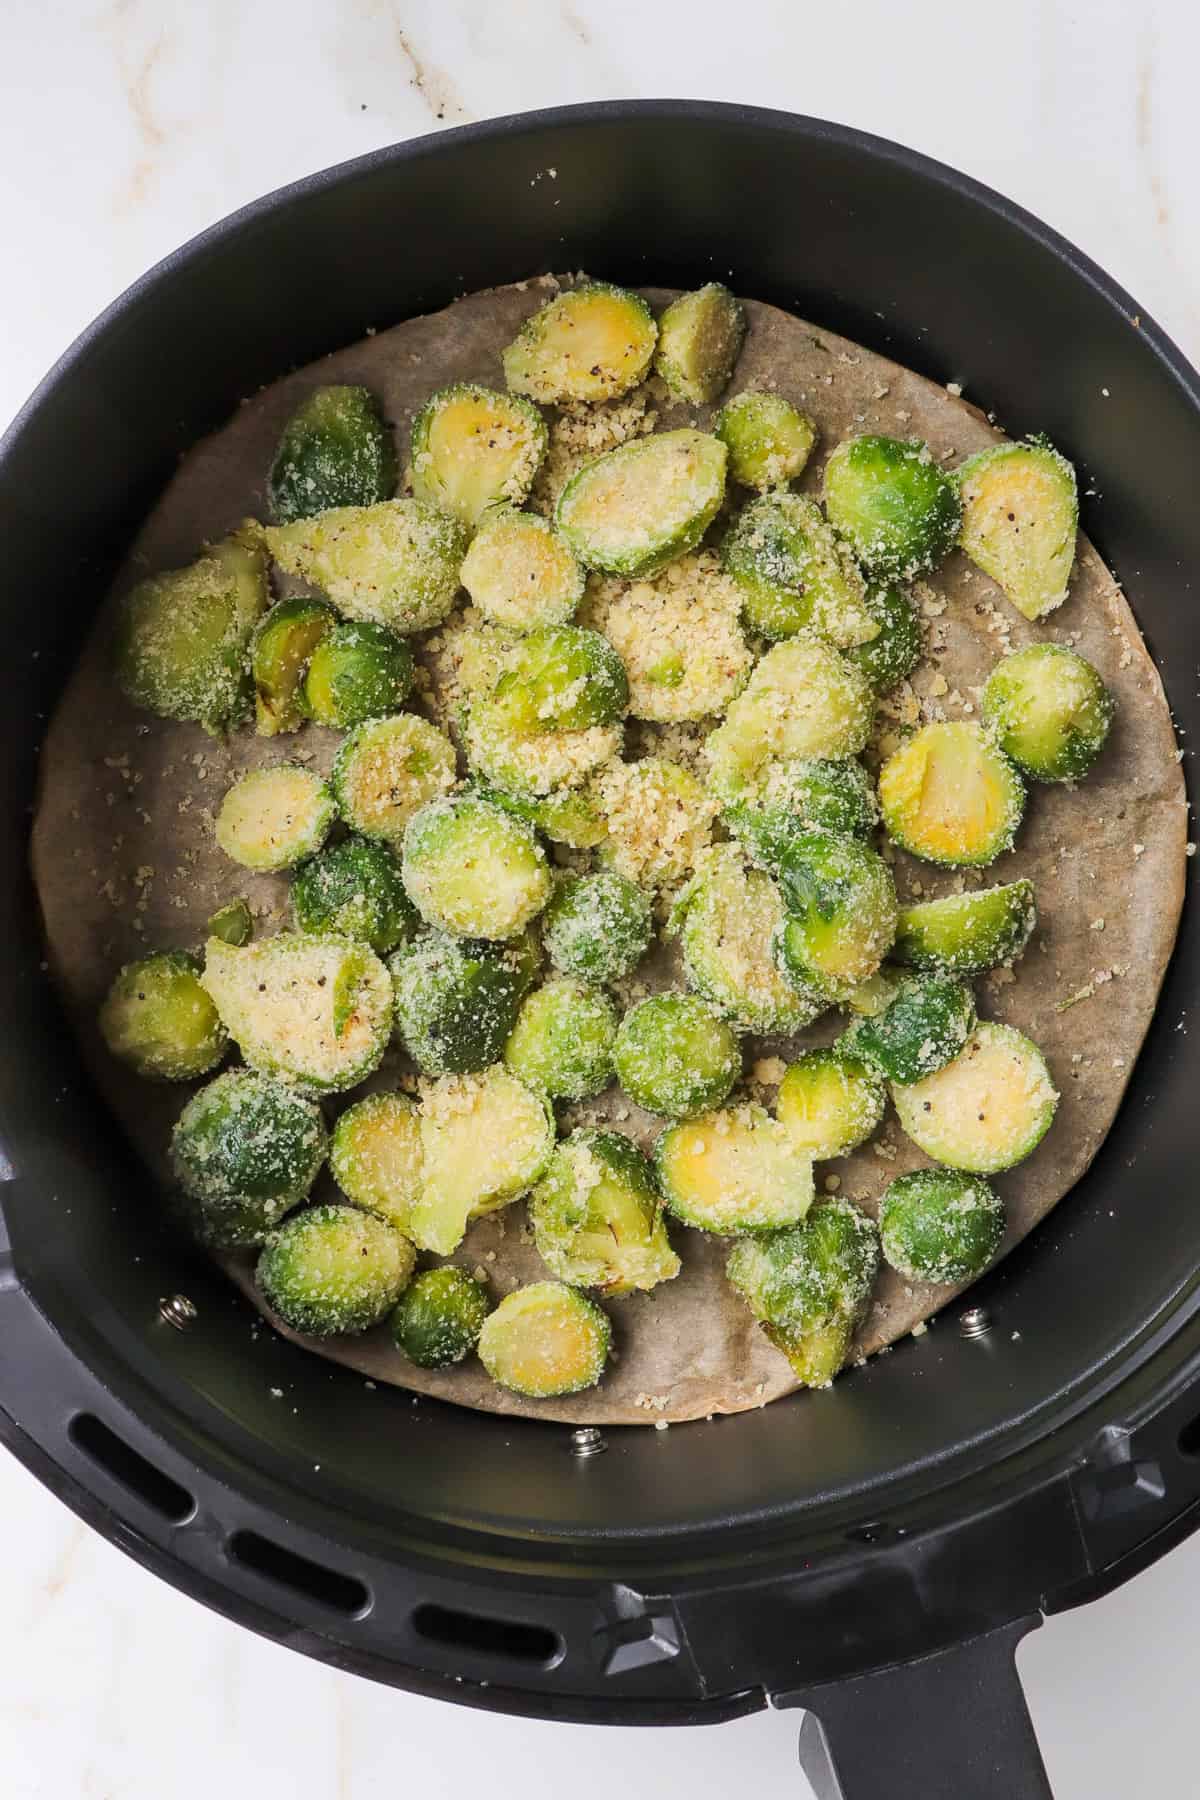 Parmesan crusted brussles sprouts in air fryer basket.